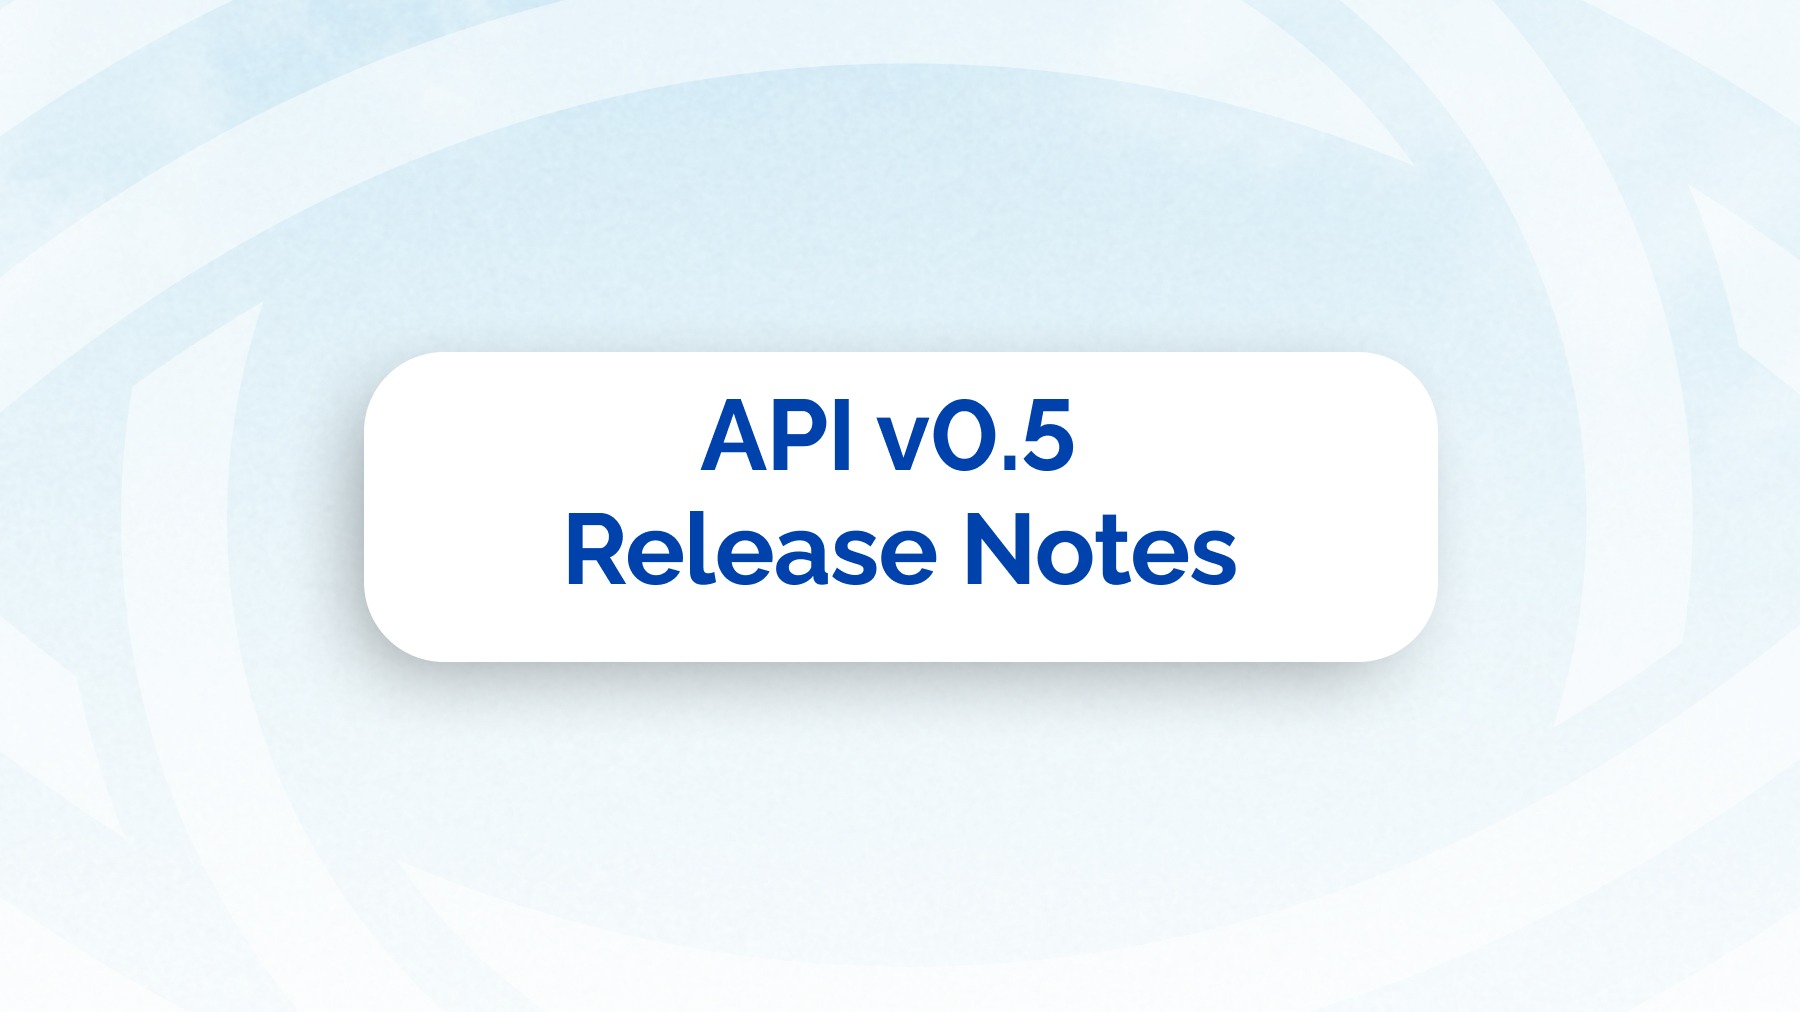 PlanetWatch API Release v0.5